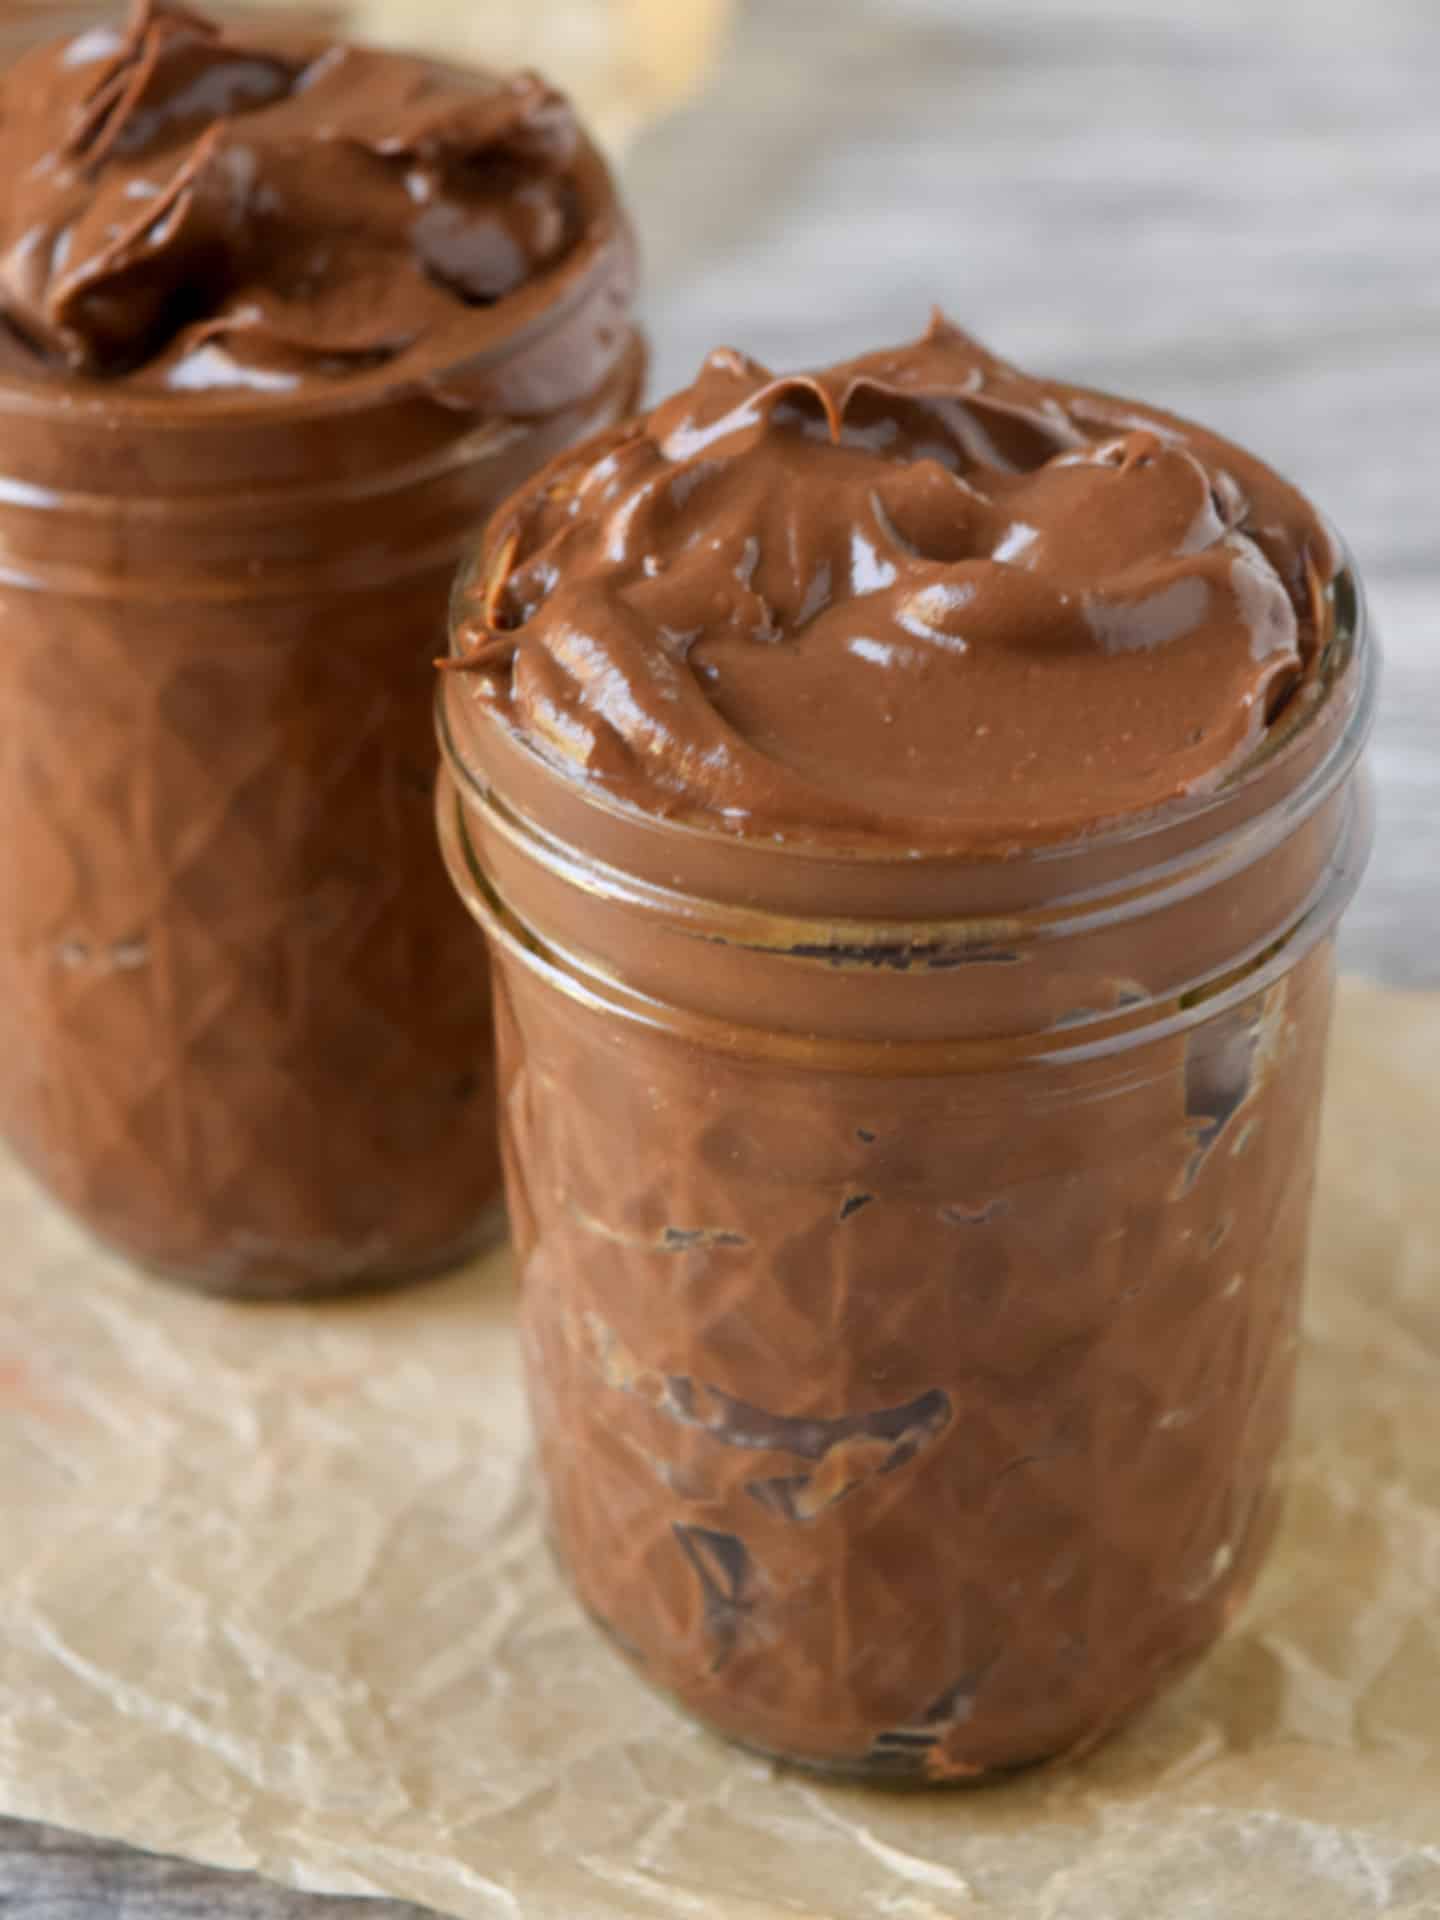 Avocado chocolate pudding in glass jar.